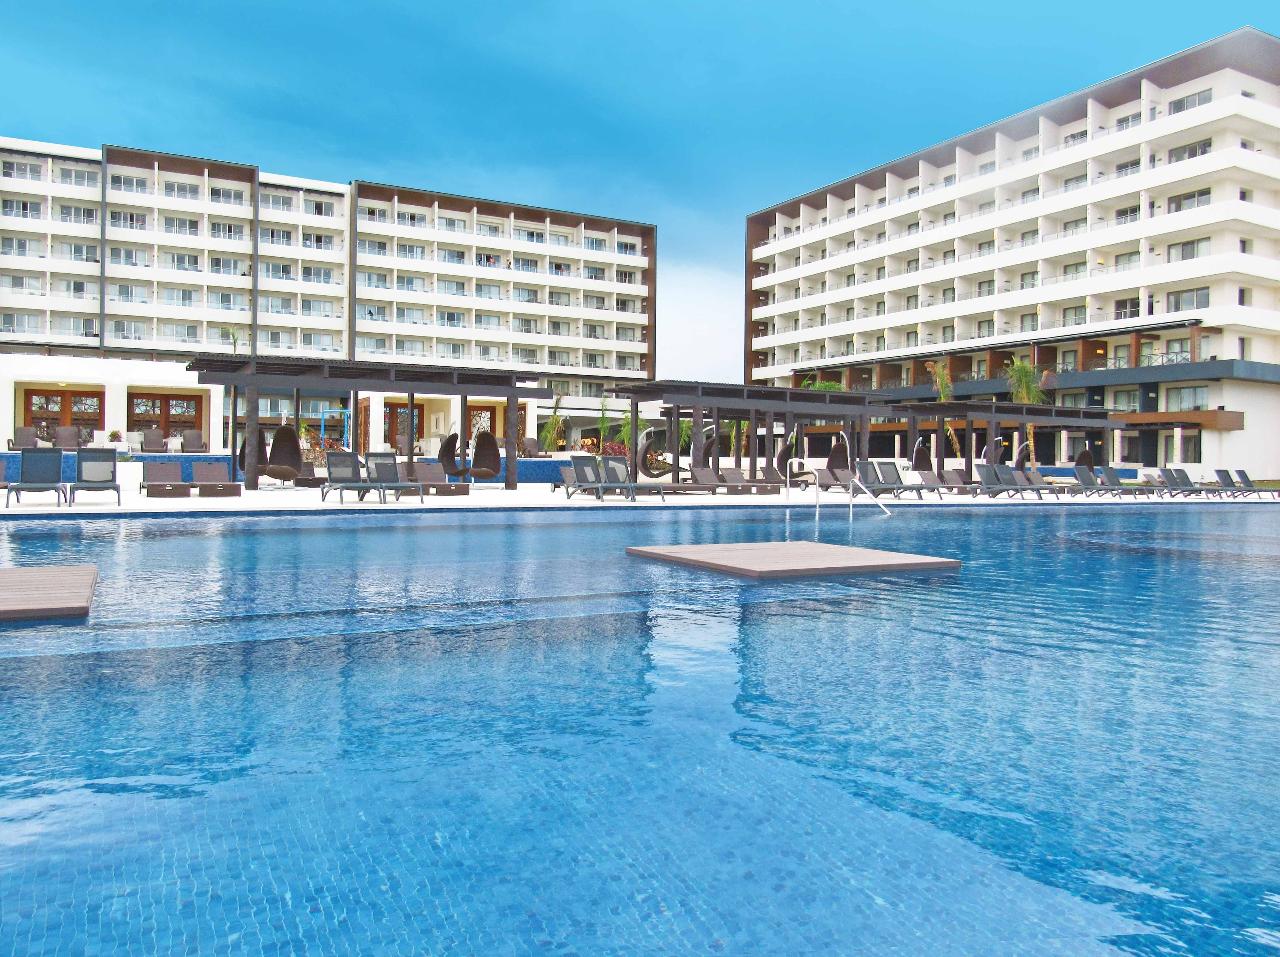 Royalton Blue Waters Hotel - Falmouth, Jamaica (All inclusive)